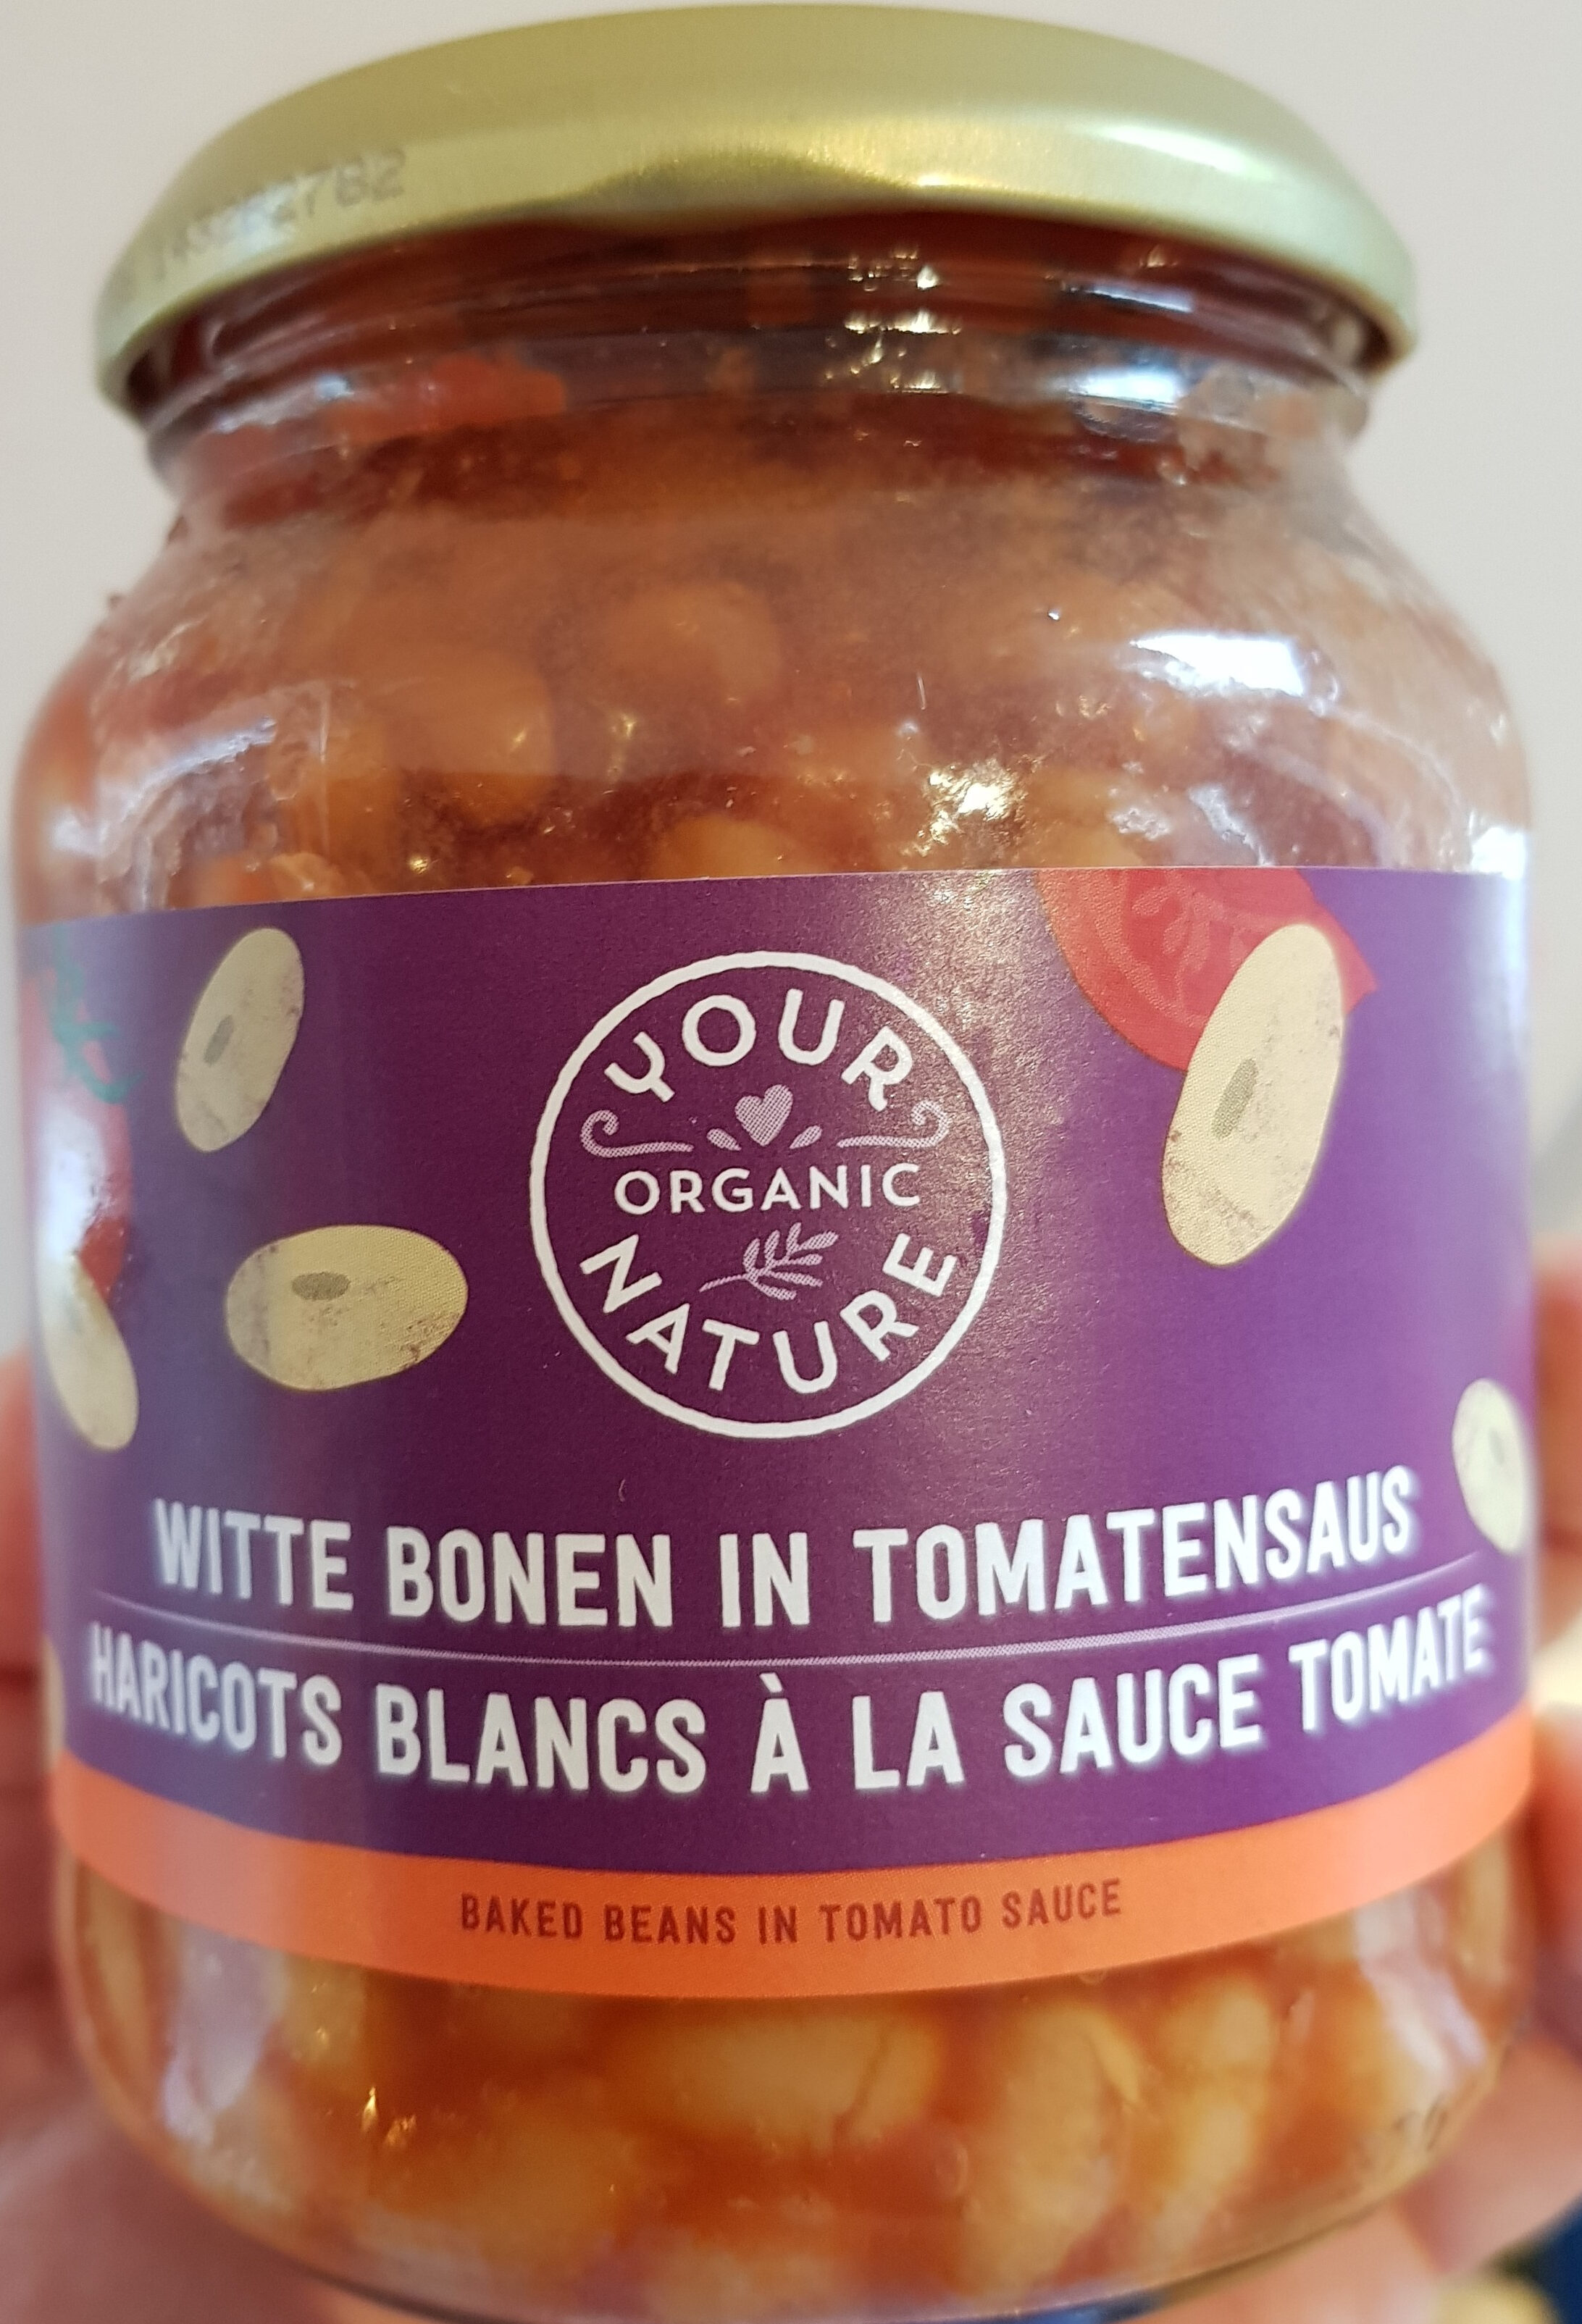 Witte bonen in tomatensaus - Product